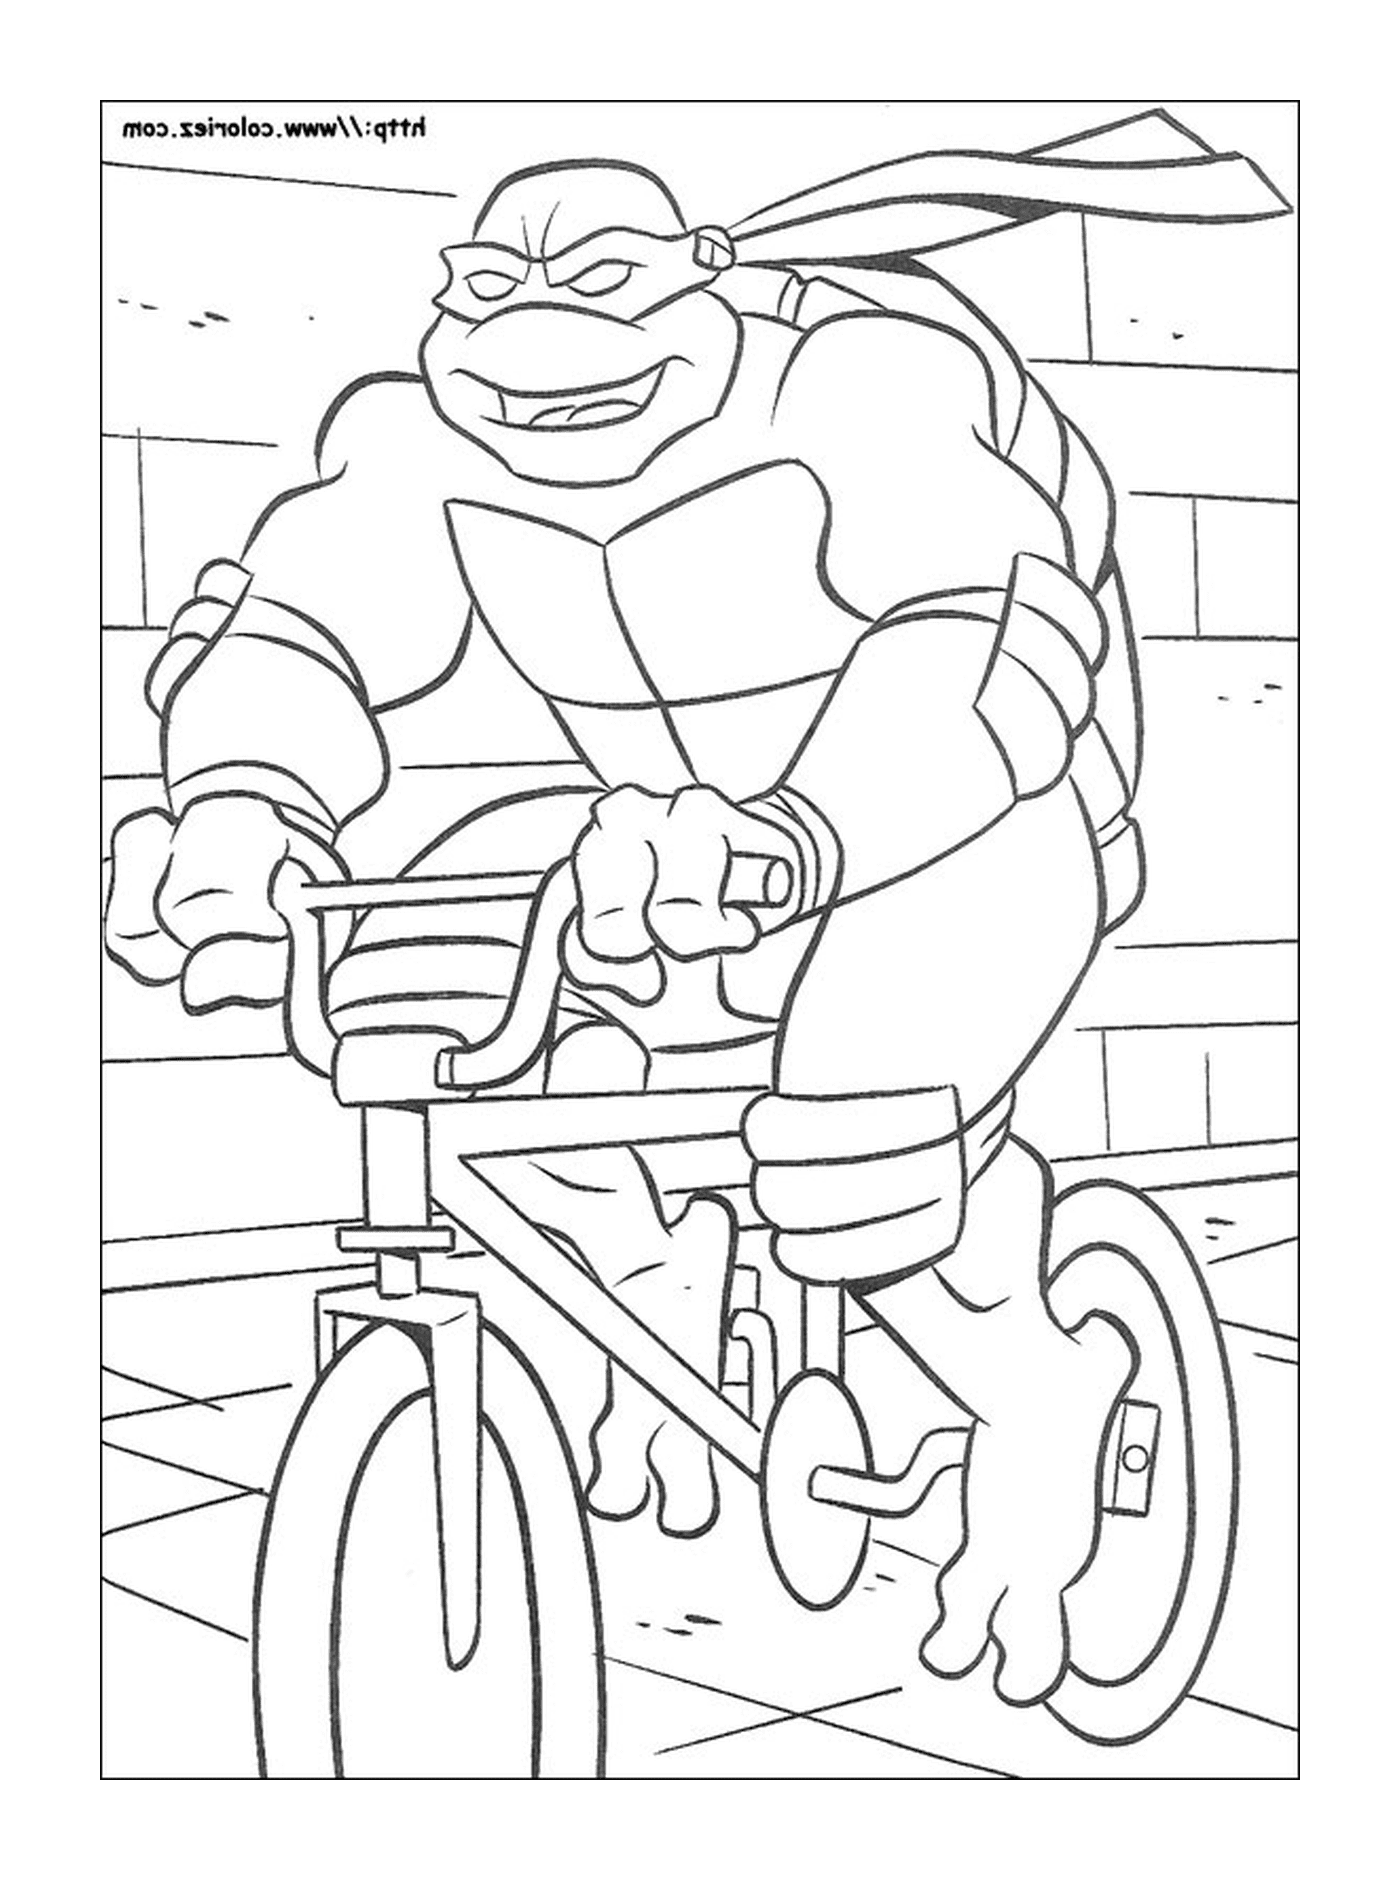  Maschio in bicicletta 